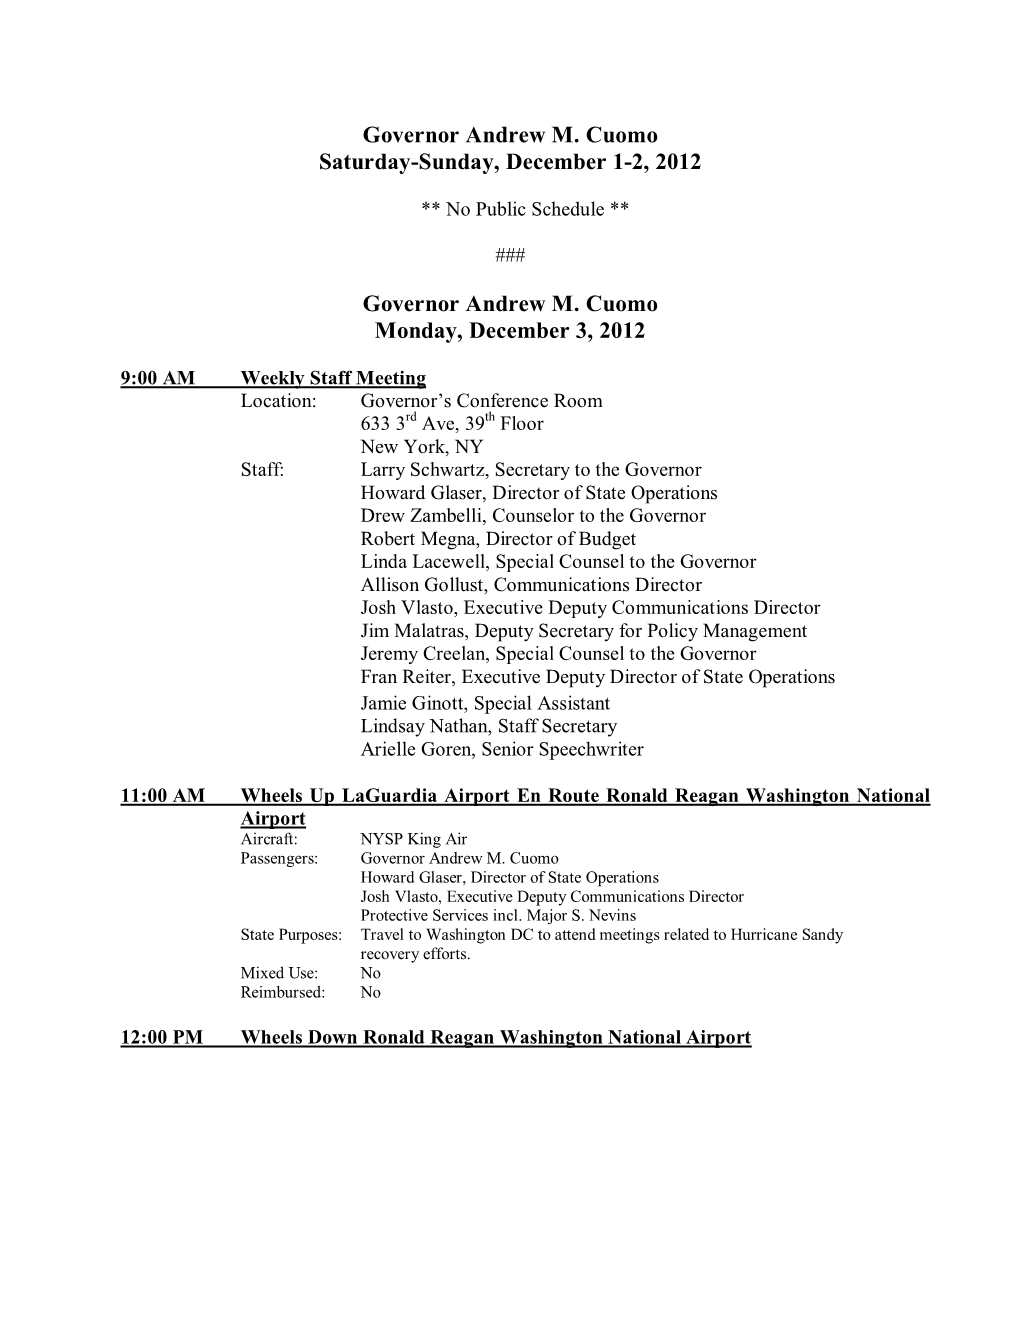 Governor Andrew M. Cuomo Saturday-Sunday, December 1-2, 2012 Governor Andrew M. Cuomo Monday, December 3, 2012